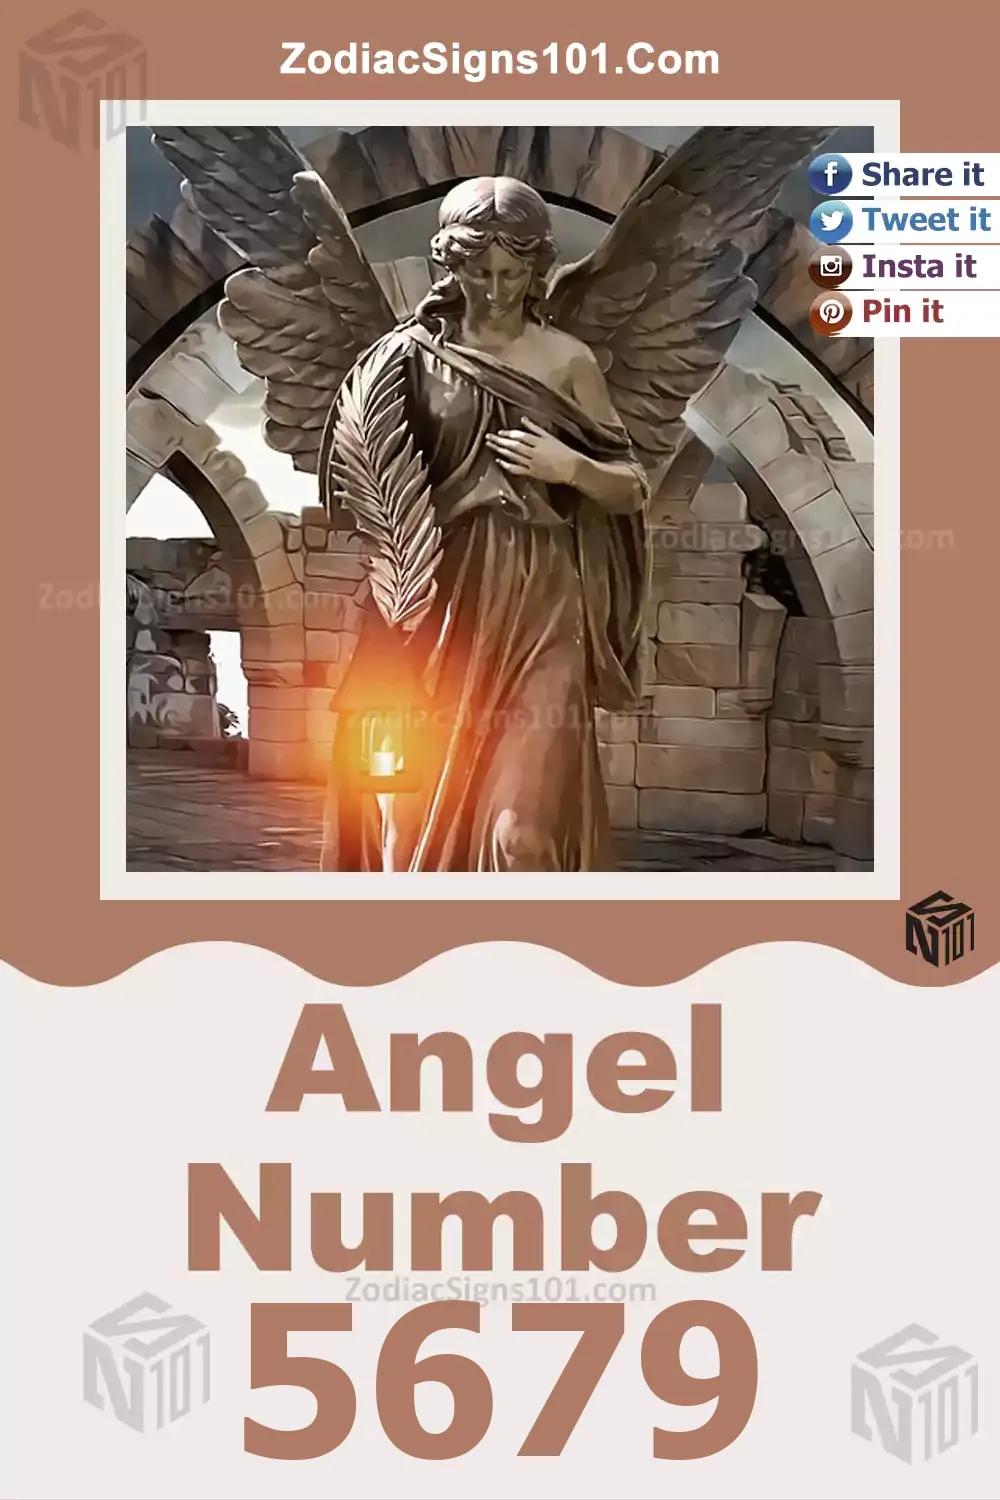 5679-Angel-Number-Meaning.jpg